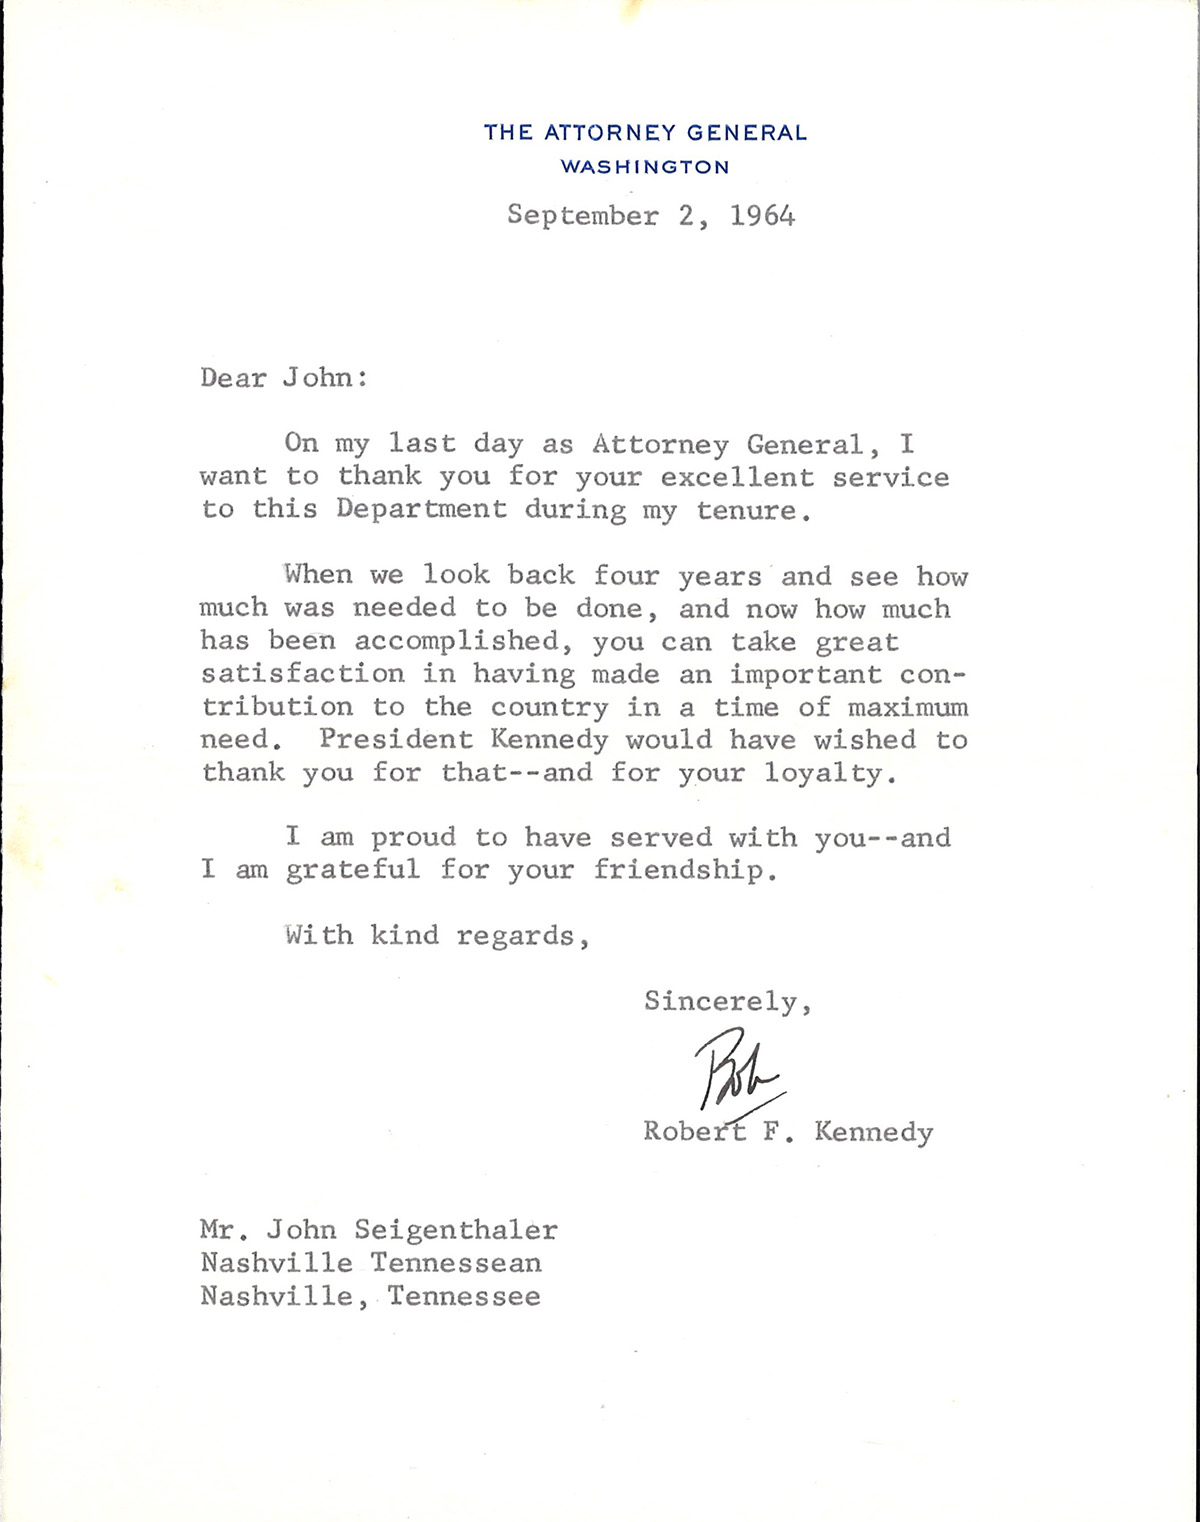 [Correspondence from Attorney General Robert Kennedy to John Seigenthaler]